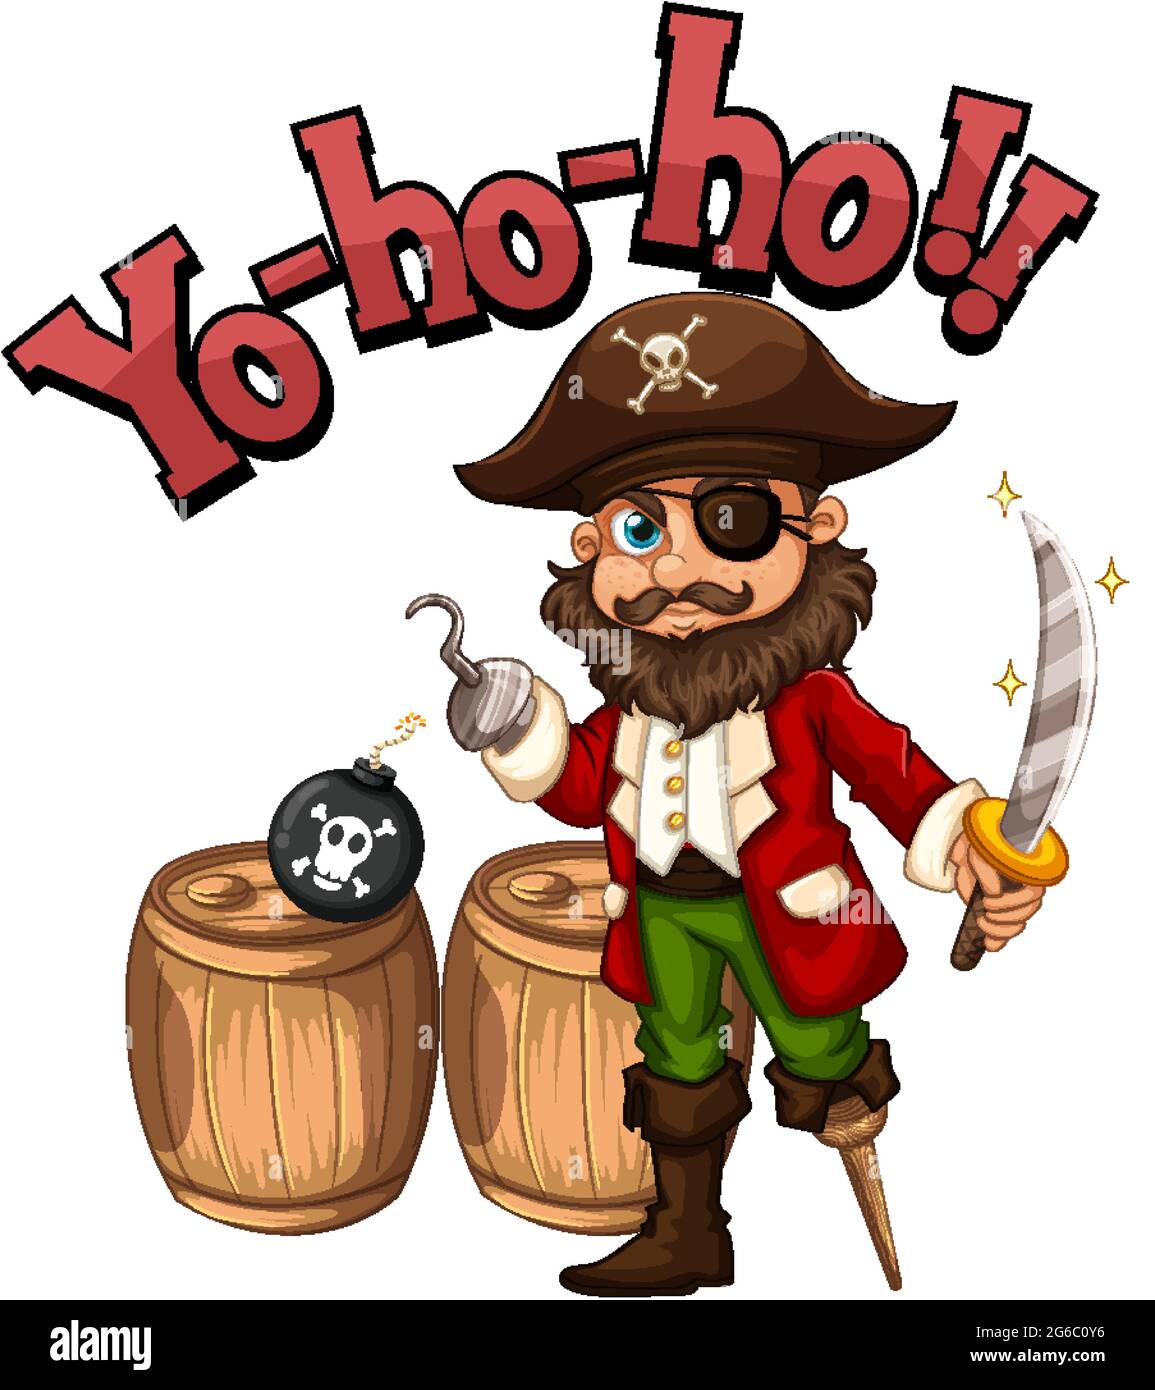 https://c8.alamy.com/comp/2G6C0Y6/captain-hook-cartoon-character-with-yo-ho-ho-speech-illustration-2G6C0Y6.jpg